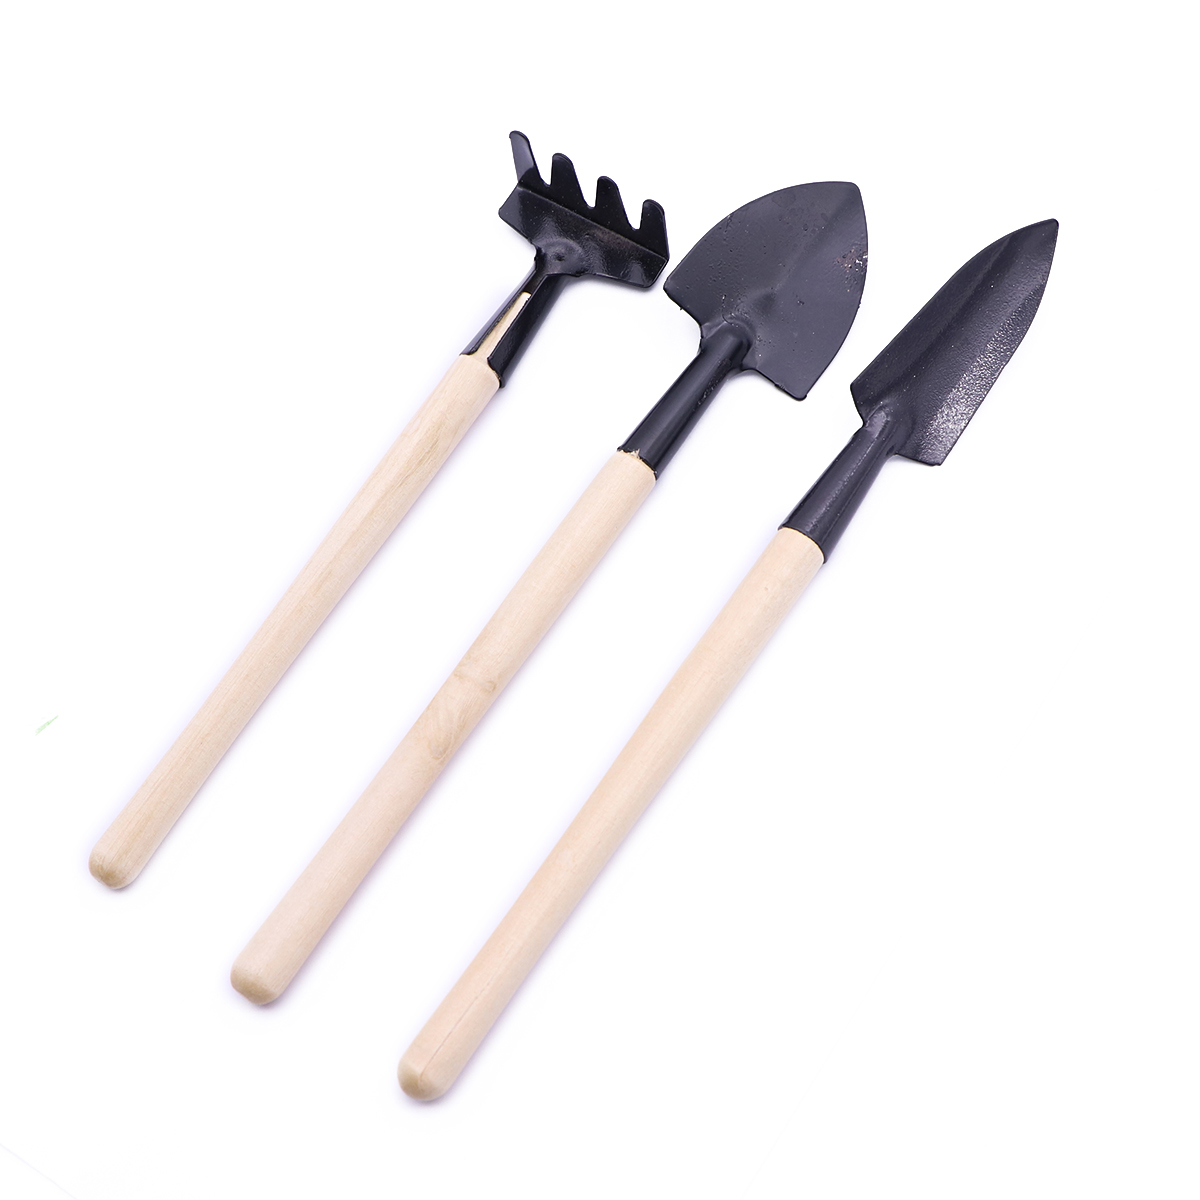 3Pcs Gardening Tools kits Gardening Shovel Spade Set Rake Small Hand Trowel Mini Indoor Garden Tools for Women Kids House Plants